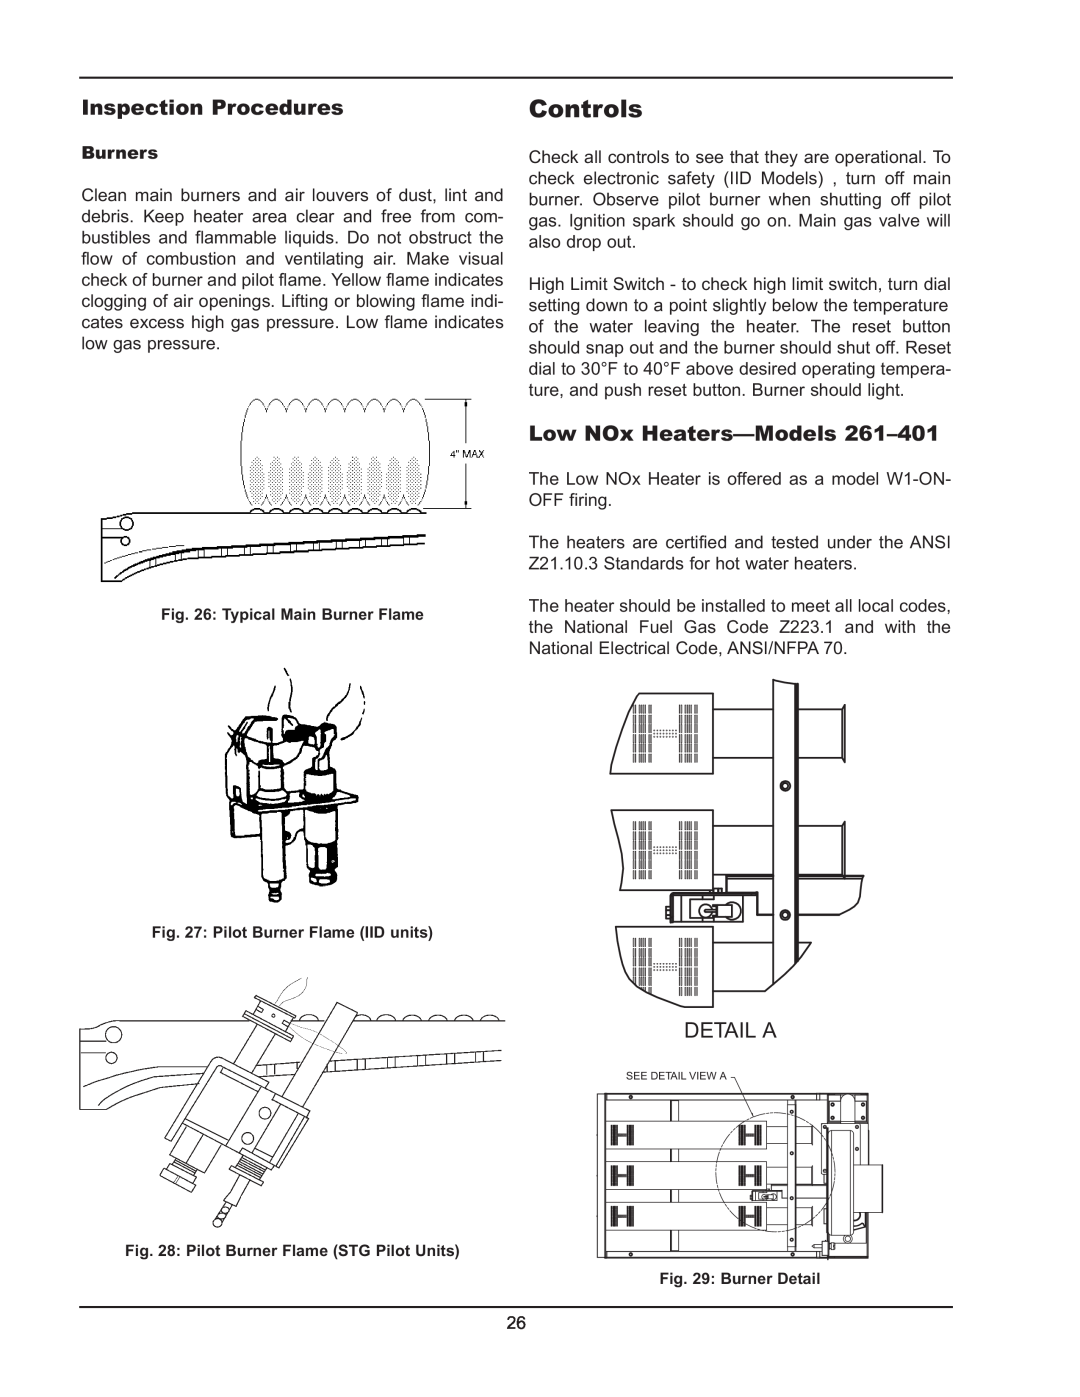 Raypak 2600401 operating instructions Controls, Inspection Procedures, Low NOx Heaters-Models, Burners 